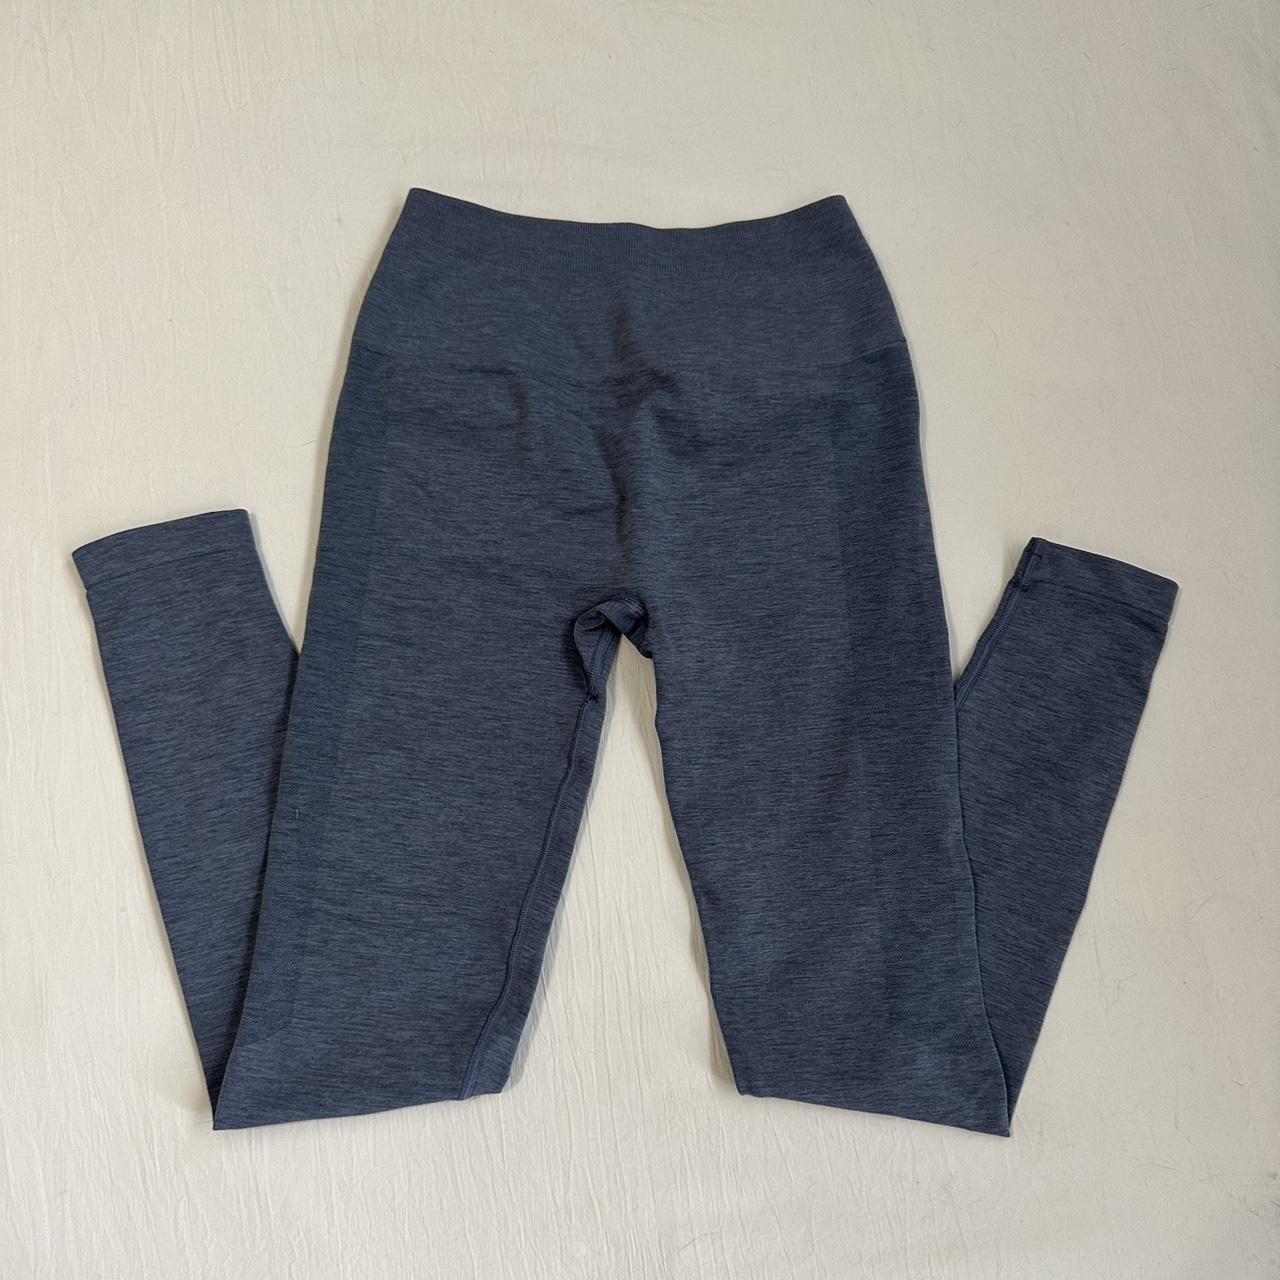 Original alphalete amplify leggings in grey, size - Depop